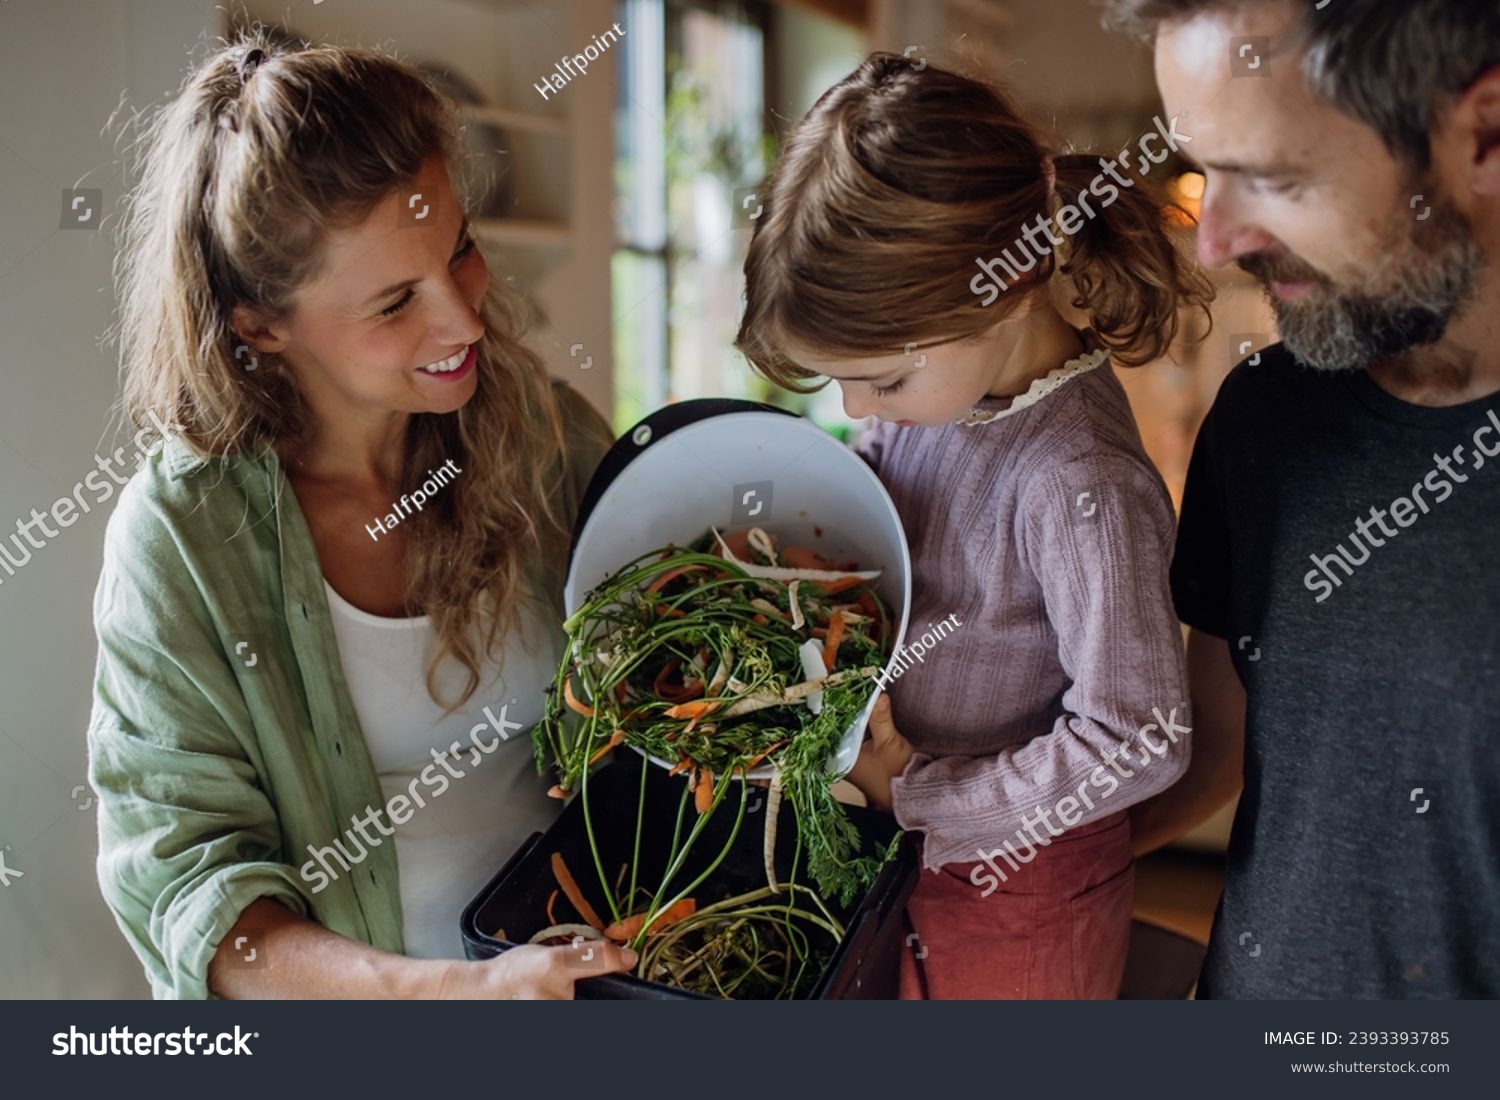 Girl helping parents put kitchen waste, peel and leftover vegetables scraps into kitchen compostable waste. Concept of composting kitchen biodegradable waste. #2393393785